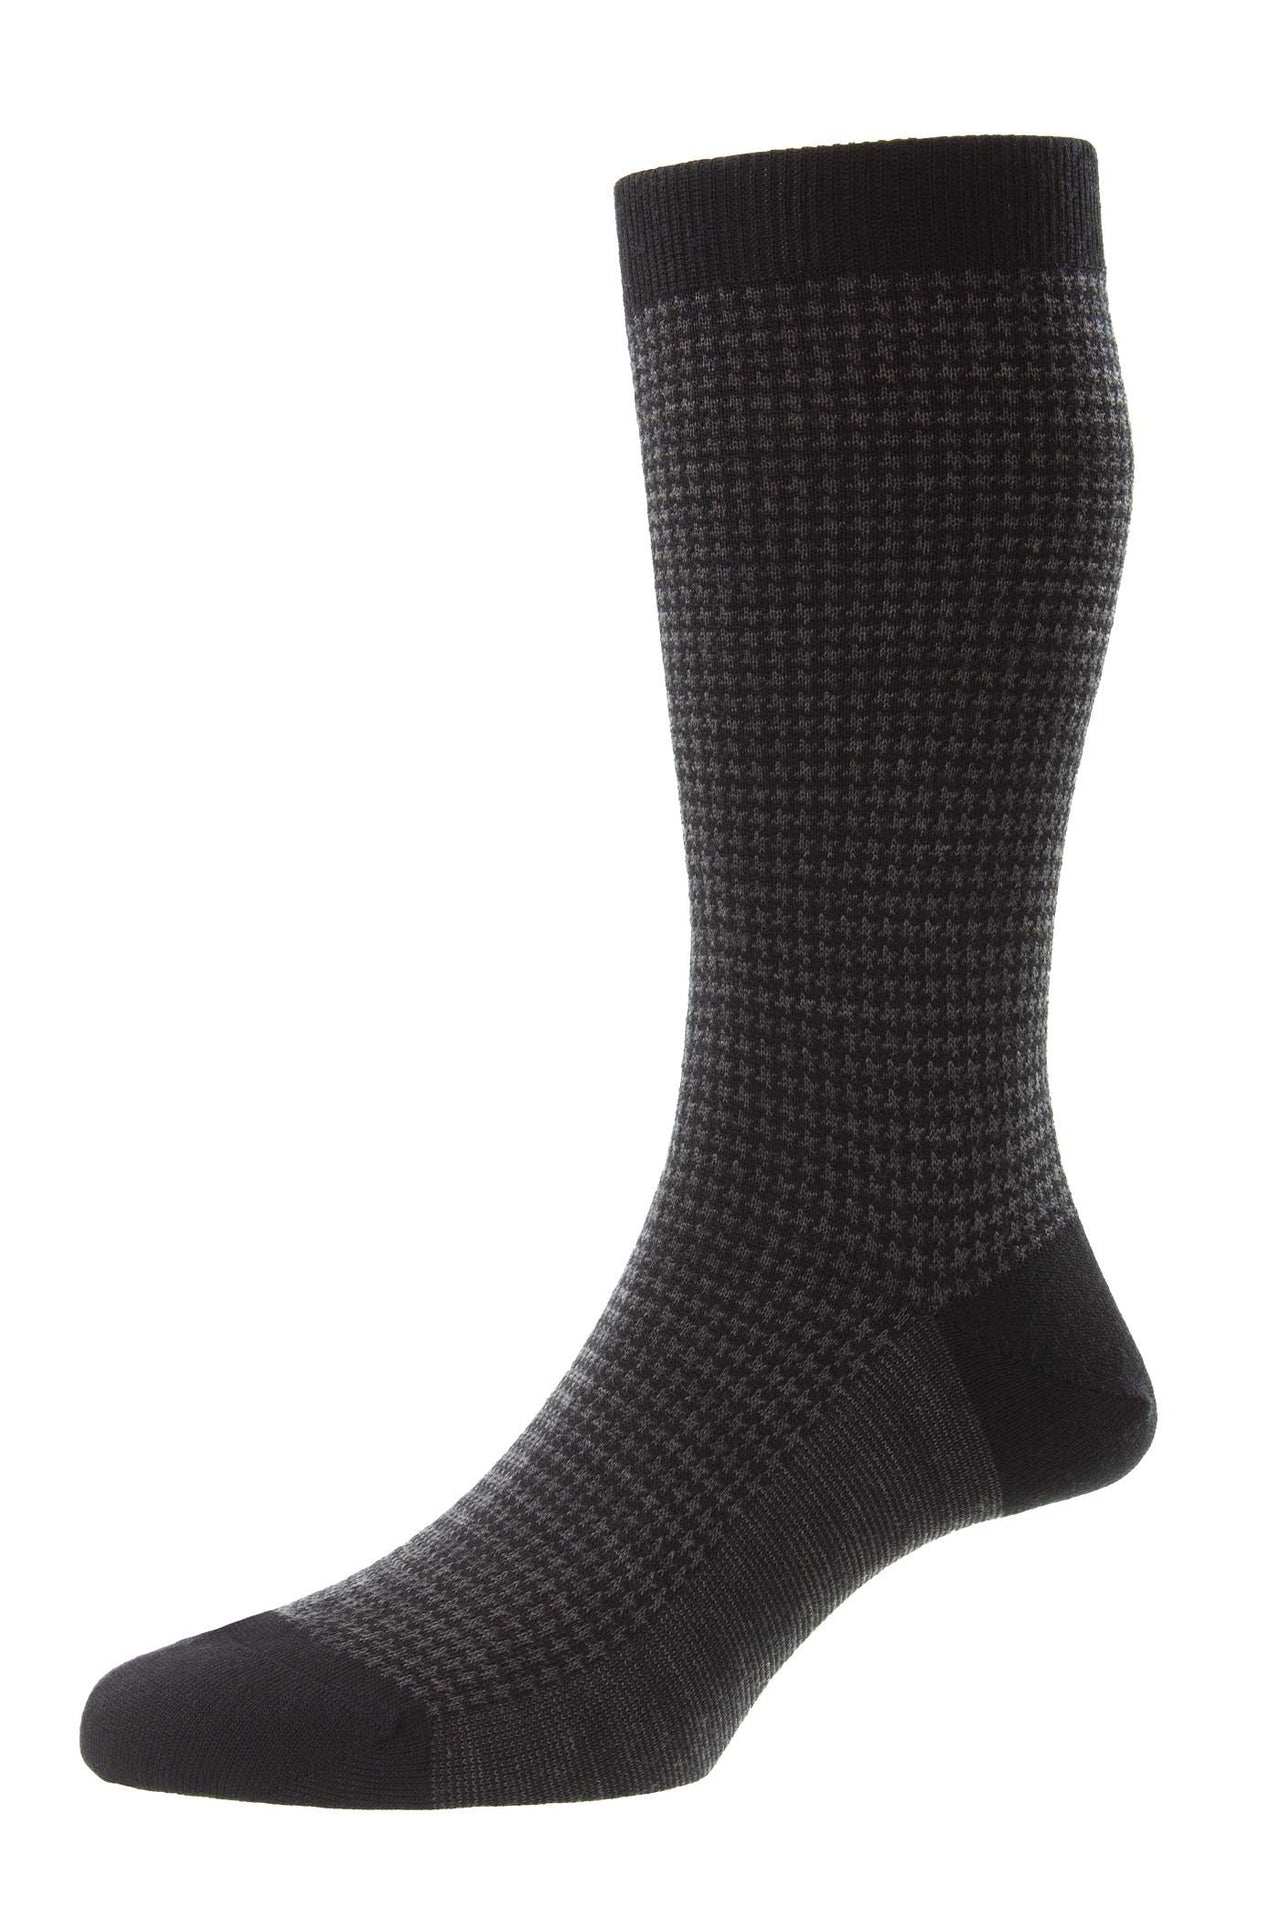 PANTHERELLA Highbury Houndstooth Merino Wool Men's Socks BLACK